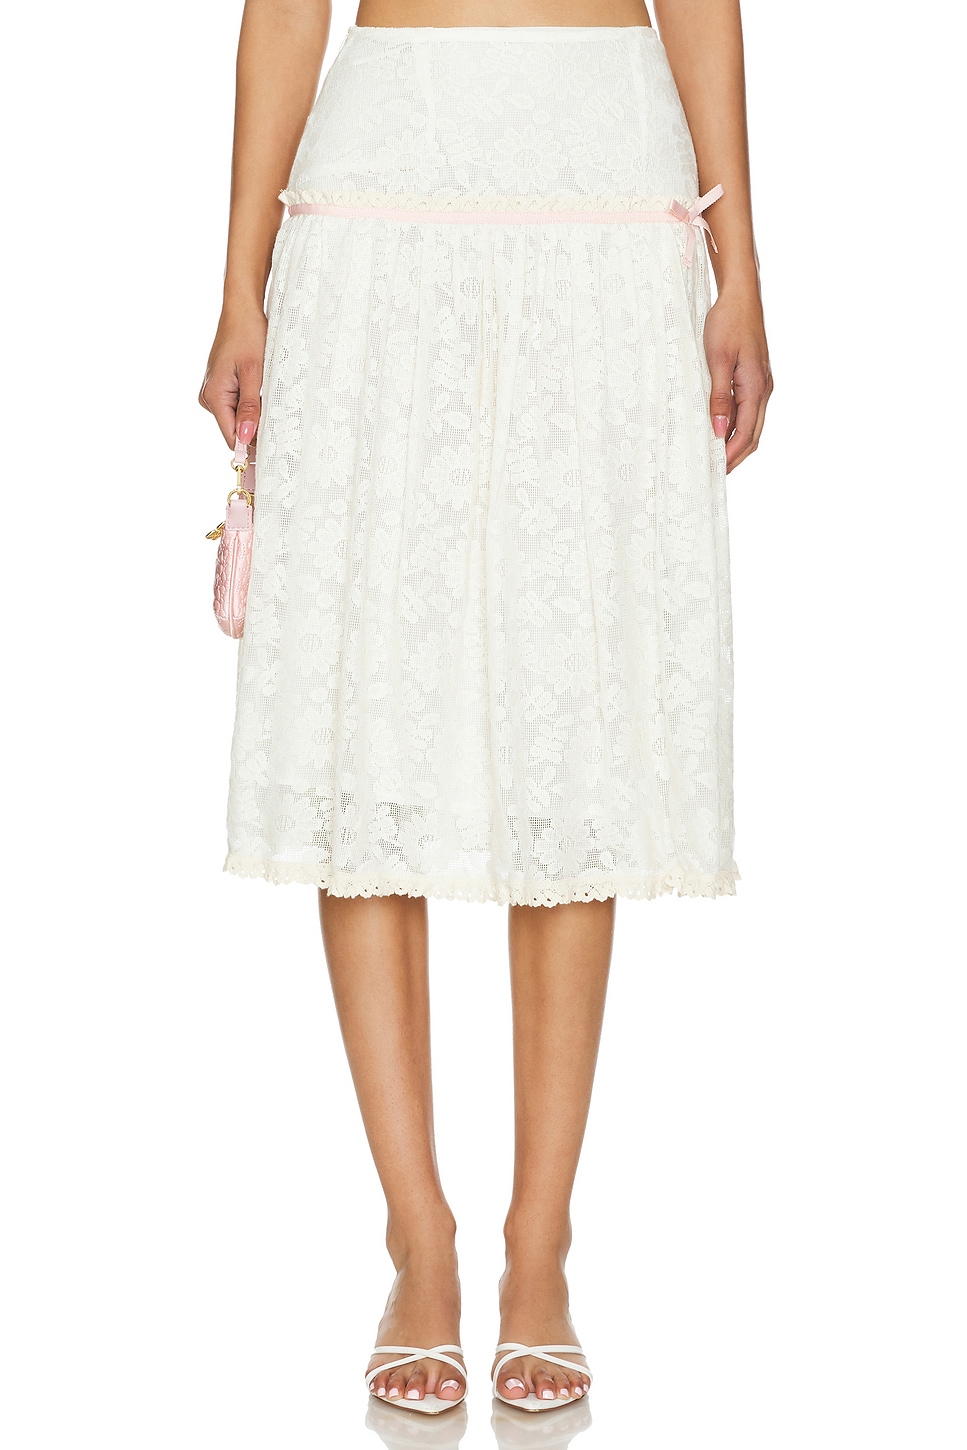 Yuhan Wang Floral Ruched Skirt - Cream | REVOLVE